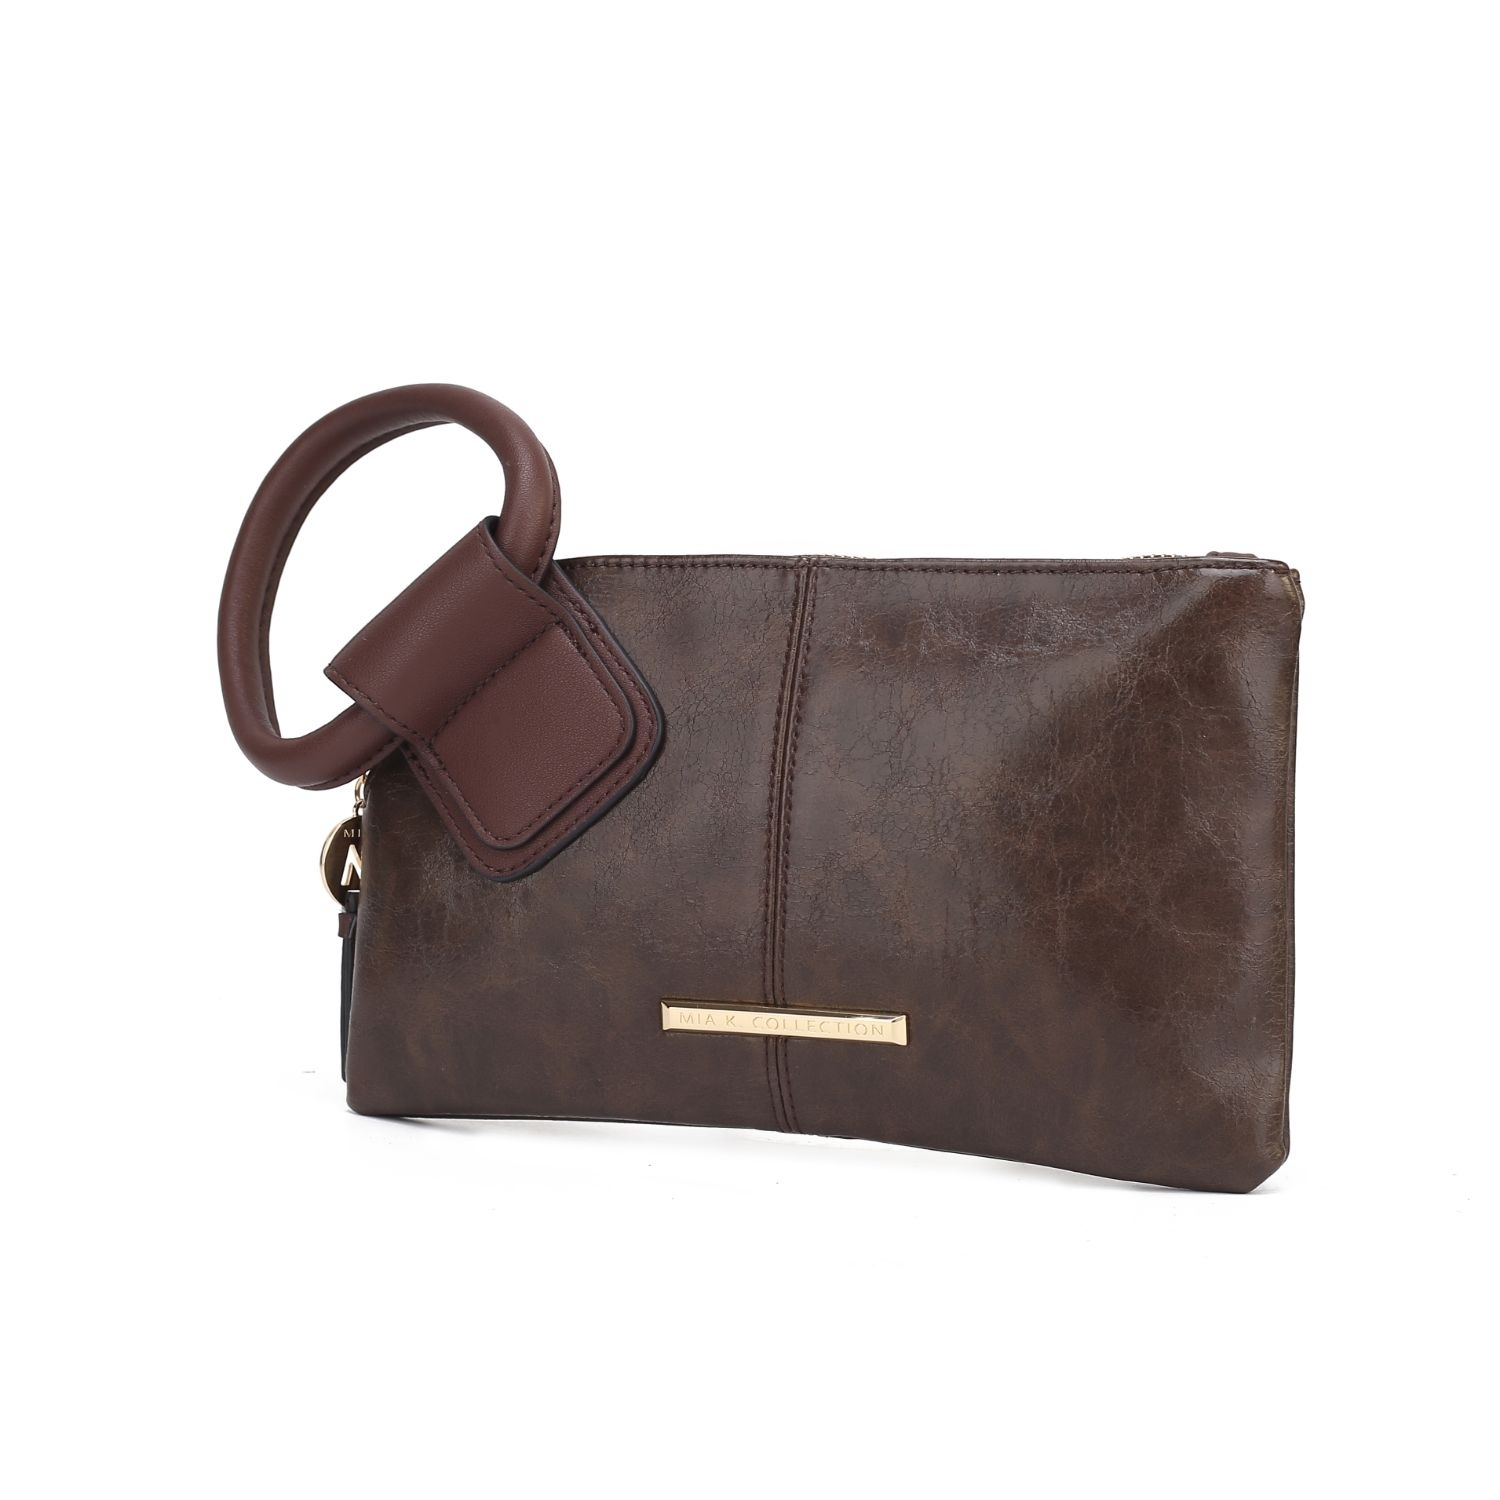 MKF Collection Simone Clutch Wristlet Handbag By Mia K. - Wine